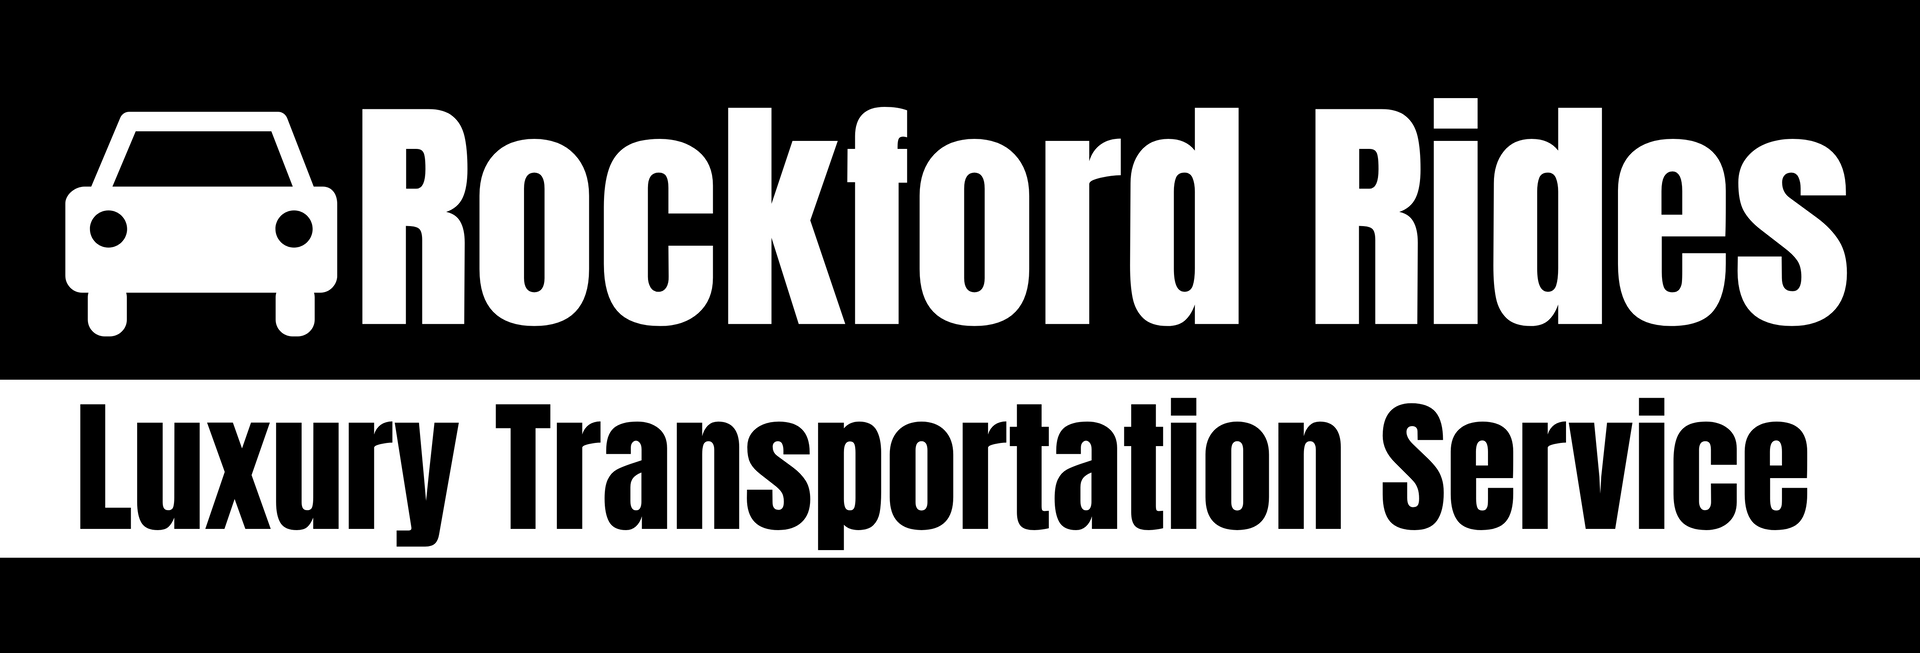 Rockford Rides Logo 2_rockford illinois limo service